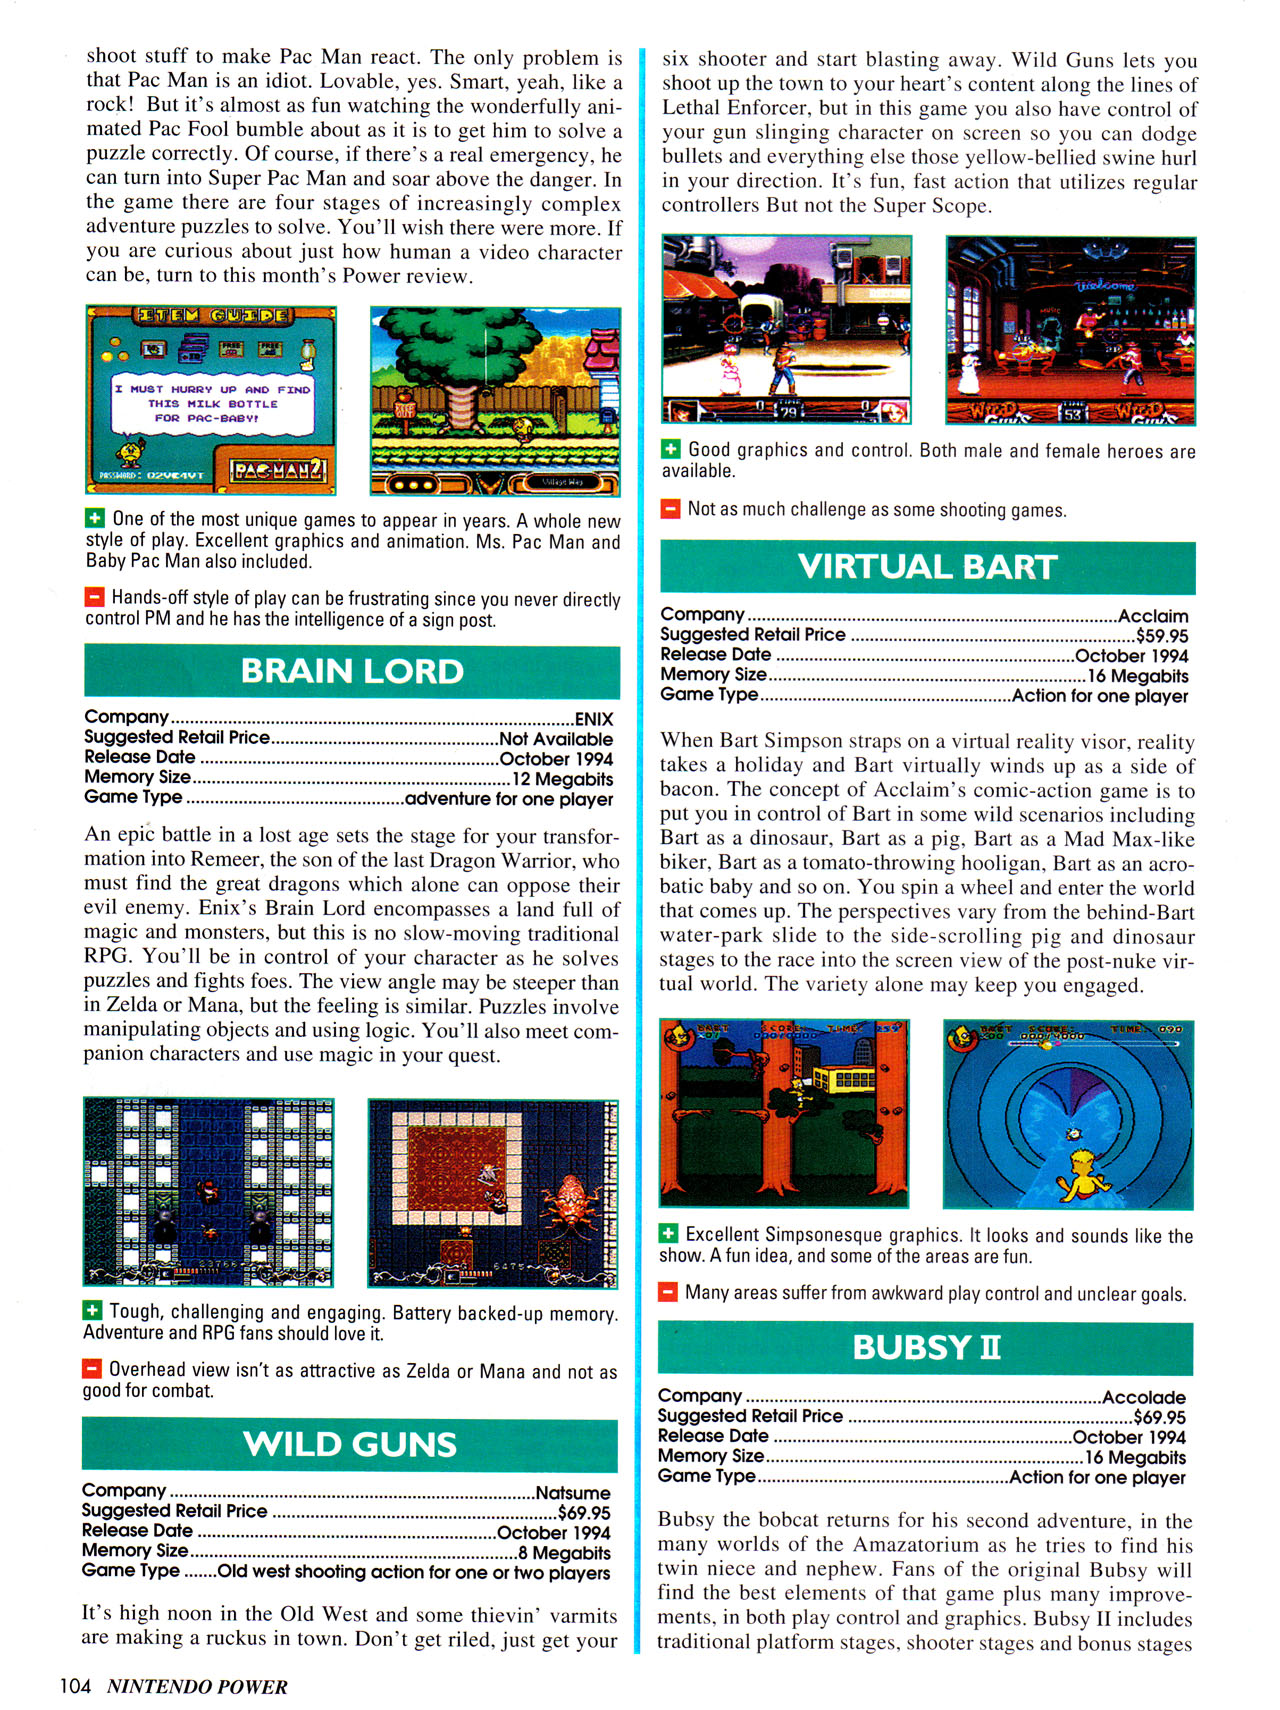 Read online Nintendo Power comic -  Issue #65 - 113